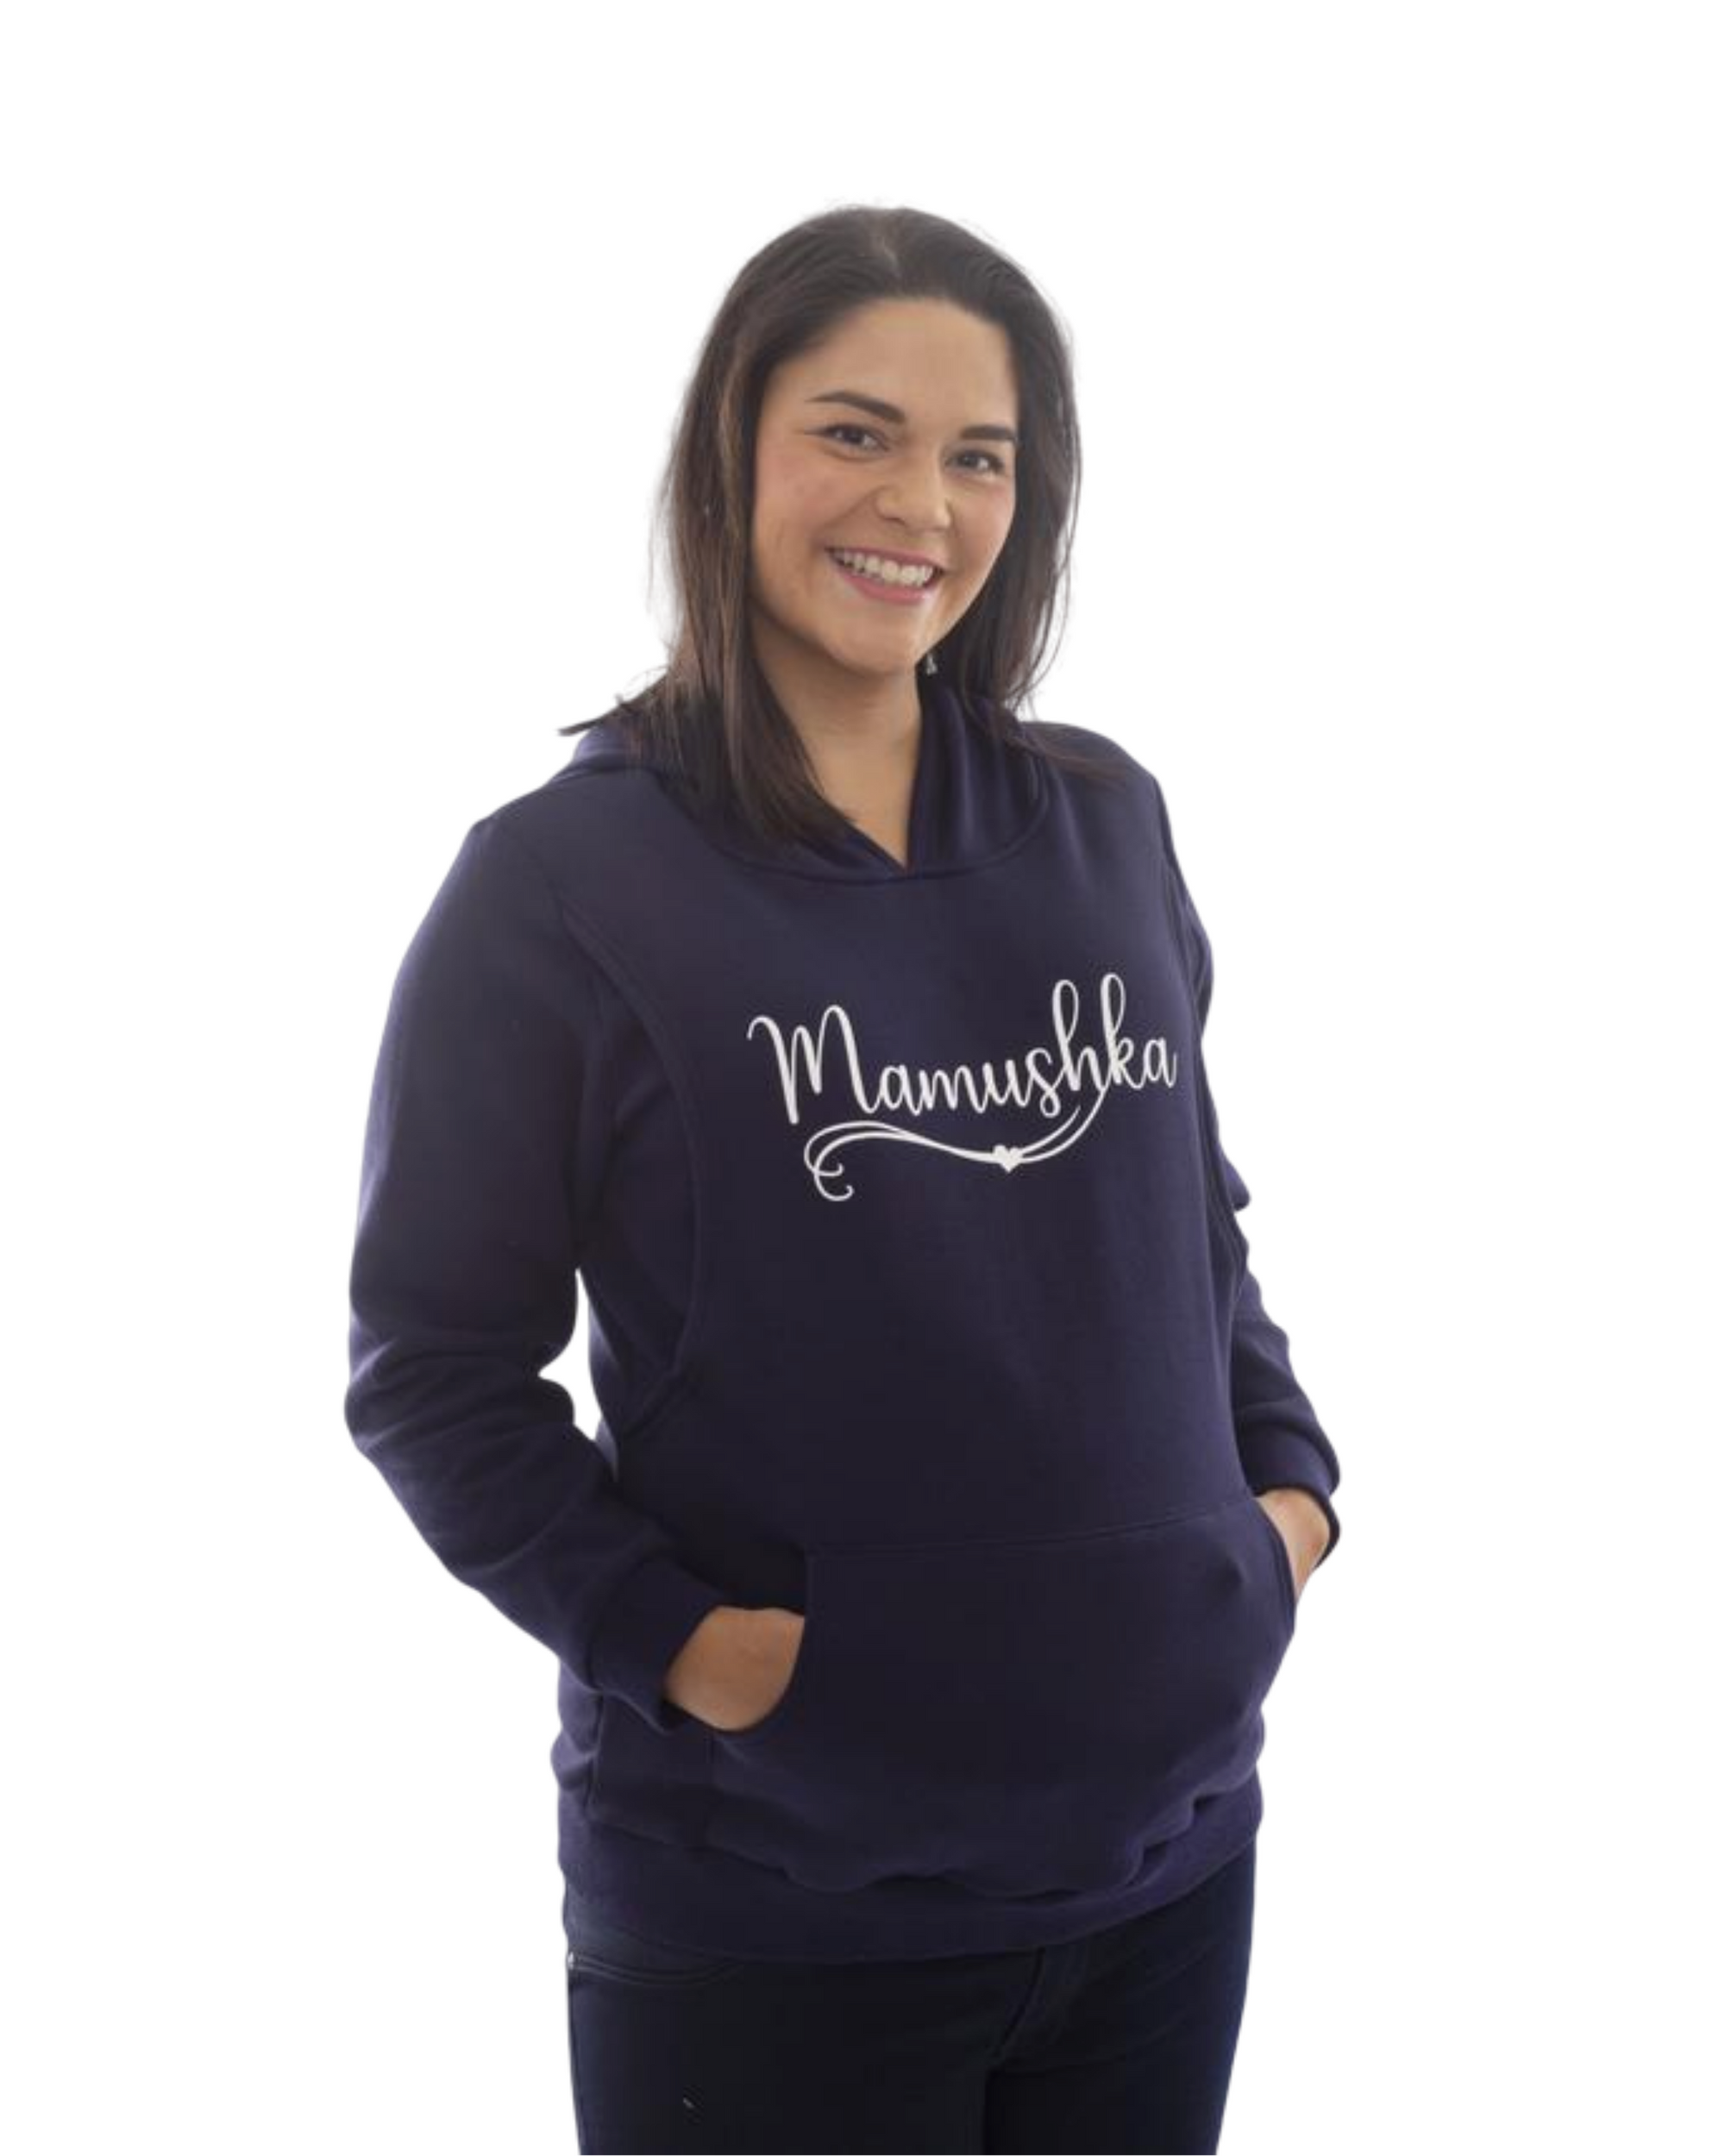 Mamushka Fleece Lined Maternity & Nursing Hoodie - Navy / White Print